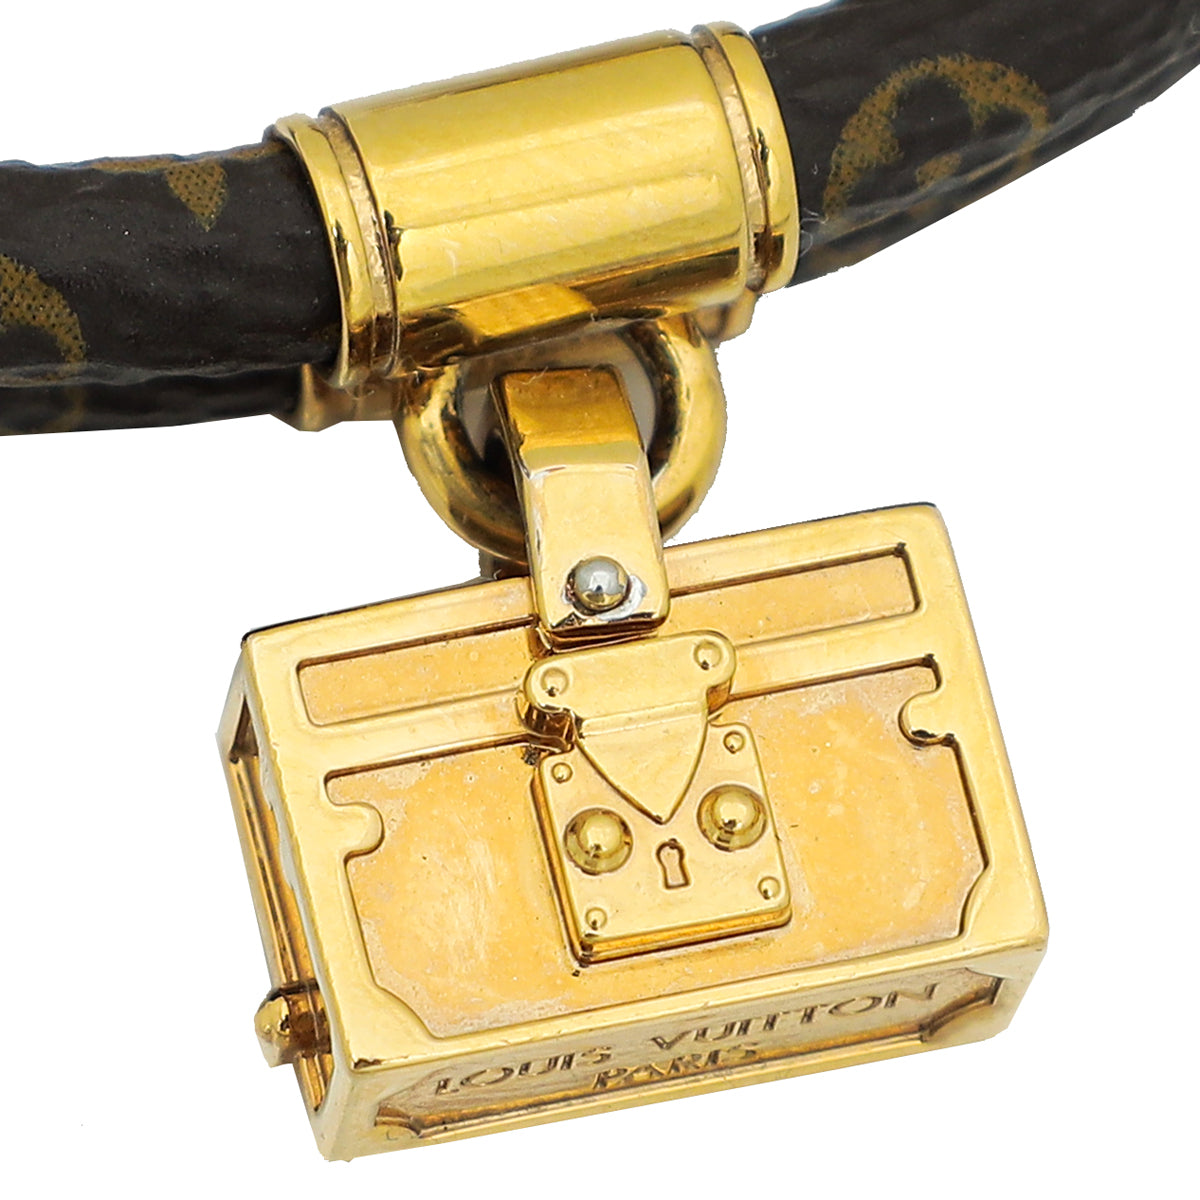 Louis Vuitton Petite Malle Charm Bracelet - Brown, Brass Charm